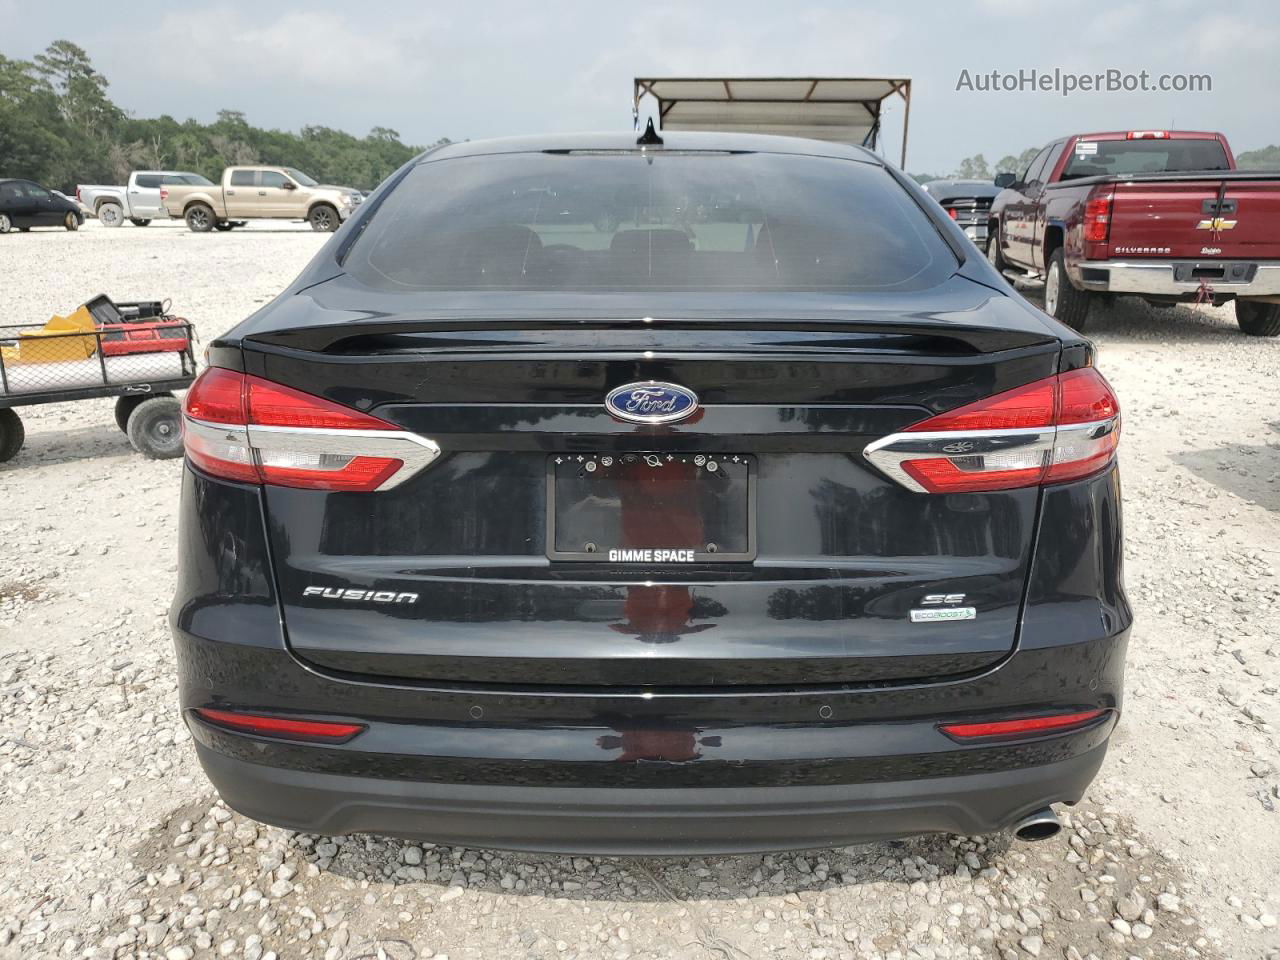 2020 Ford Fusion Se Black vin: 3FA6P0HD5LR255427